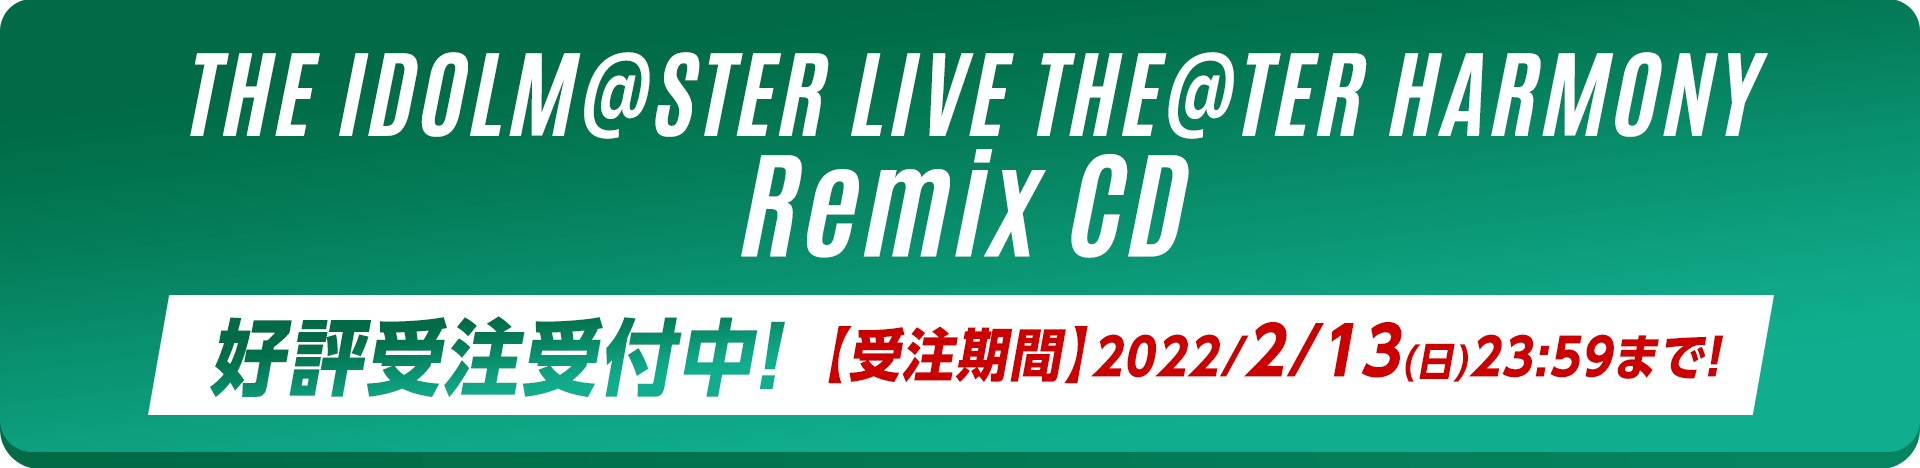 THE IDOLM@STER LIVE THE@TER HARMONY Remix CD 好評受注受付中！受注期間 2022/2/13まで